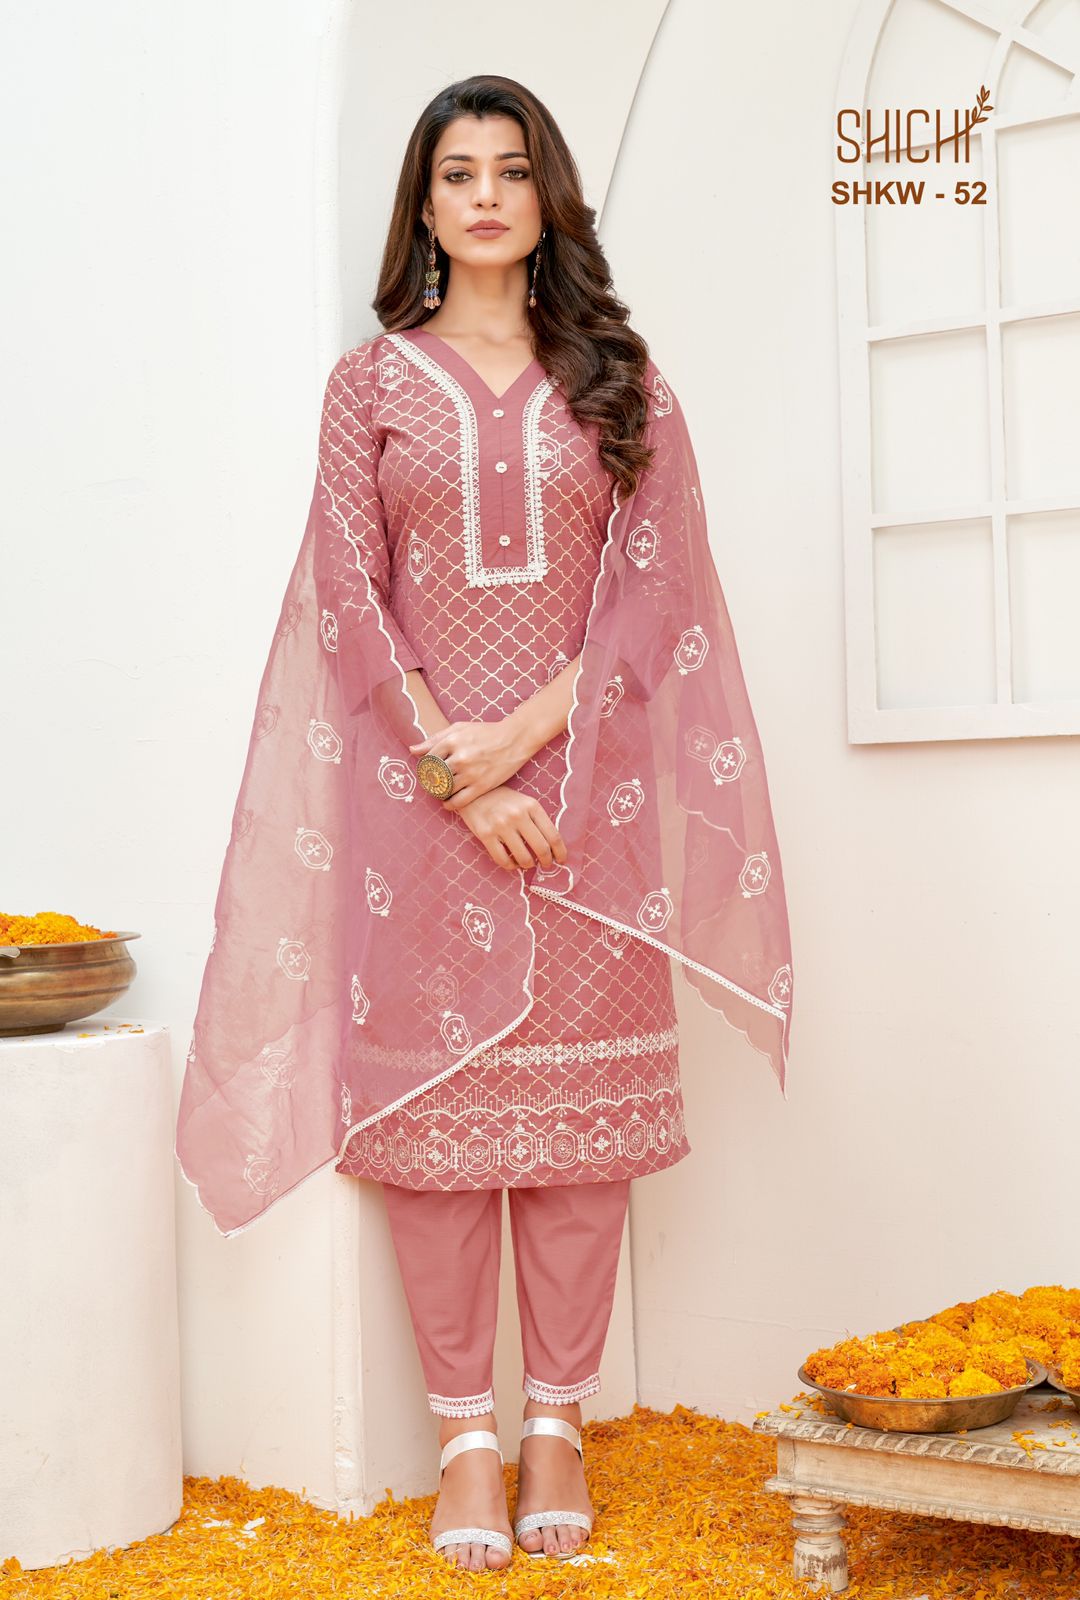 shichi indo fashion khwab cotton catchy look top bottom with dupatta catalog